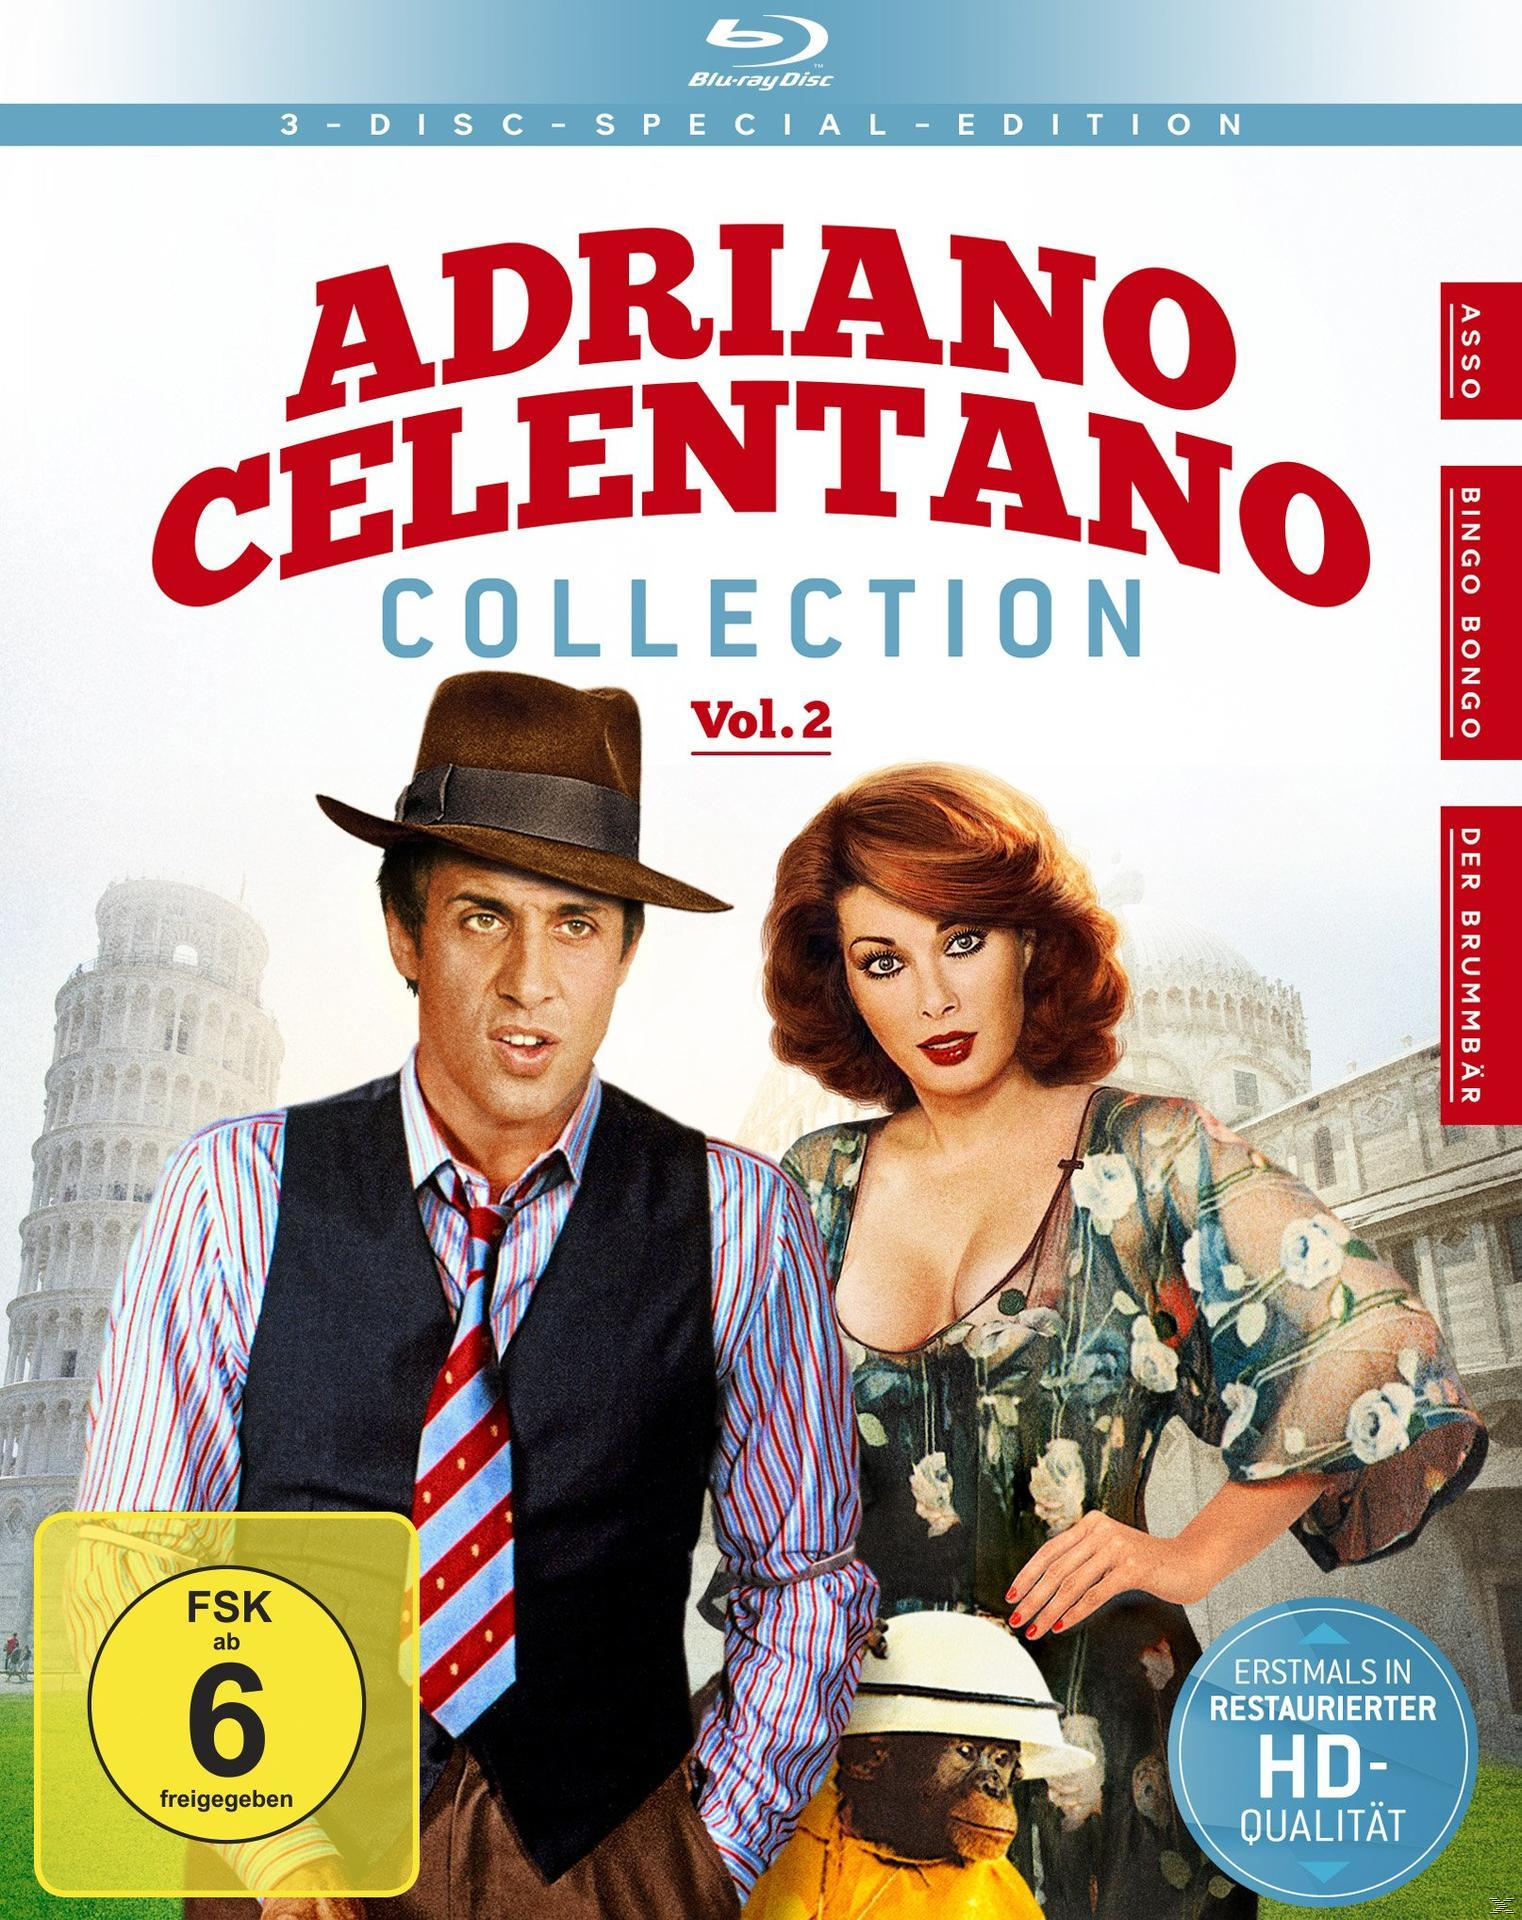 Adriano Celentano Blu-ray - Collection Vol. 2